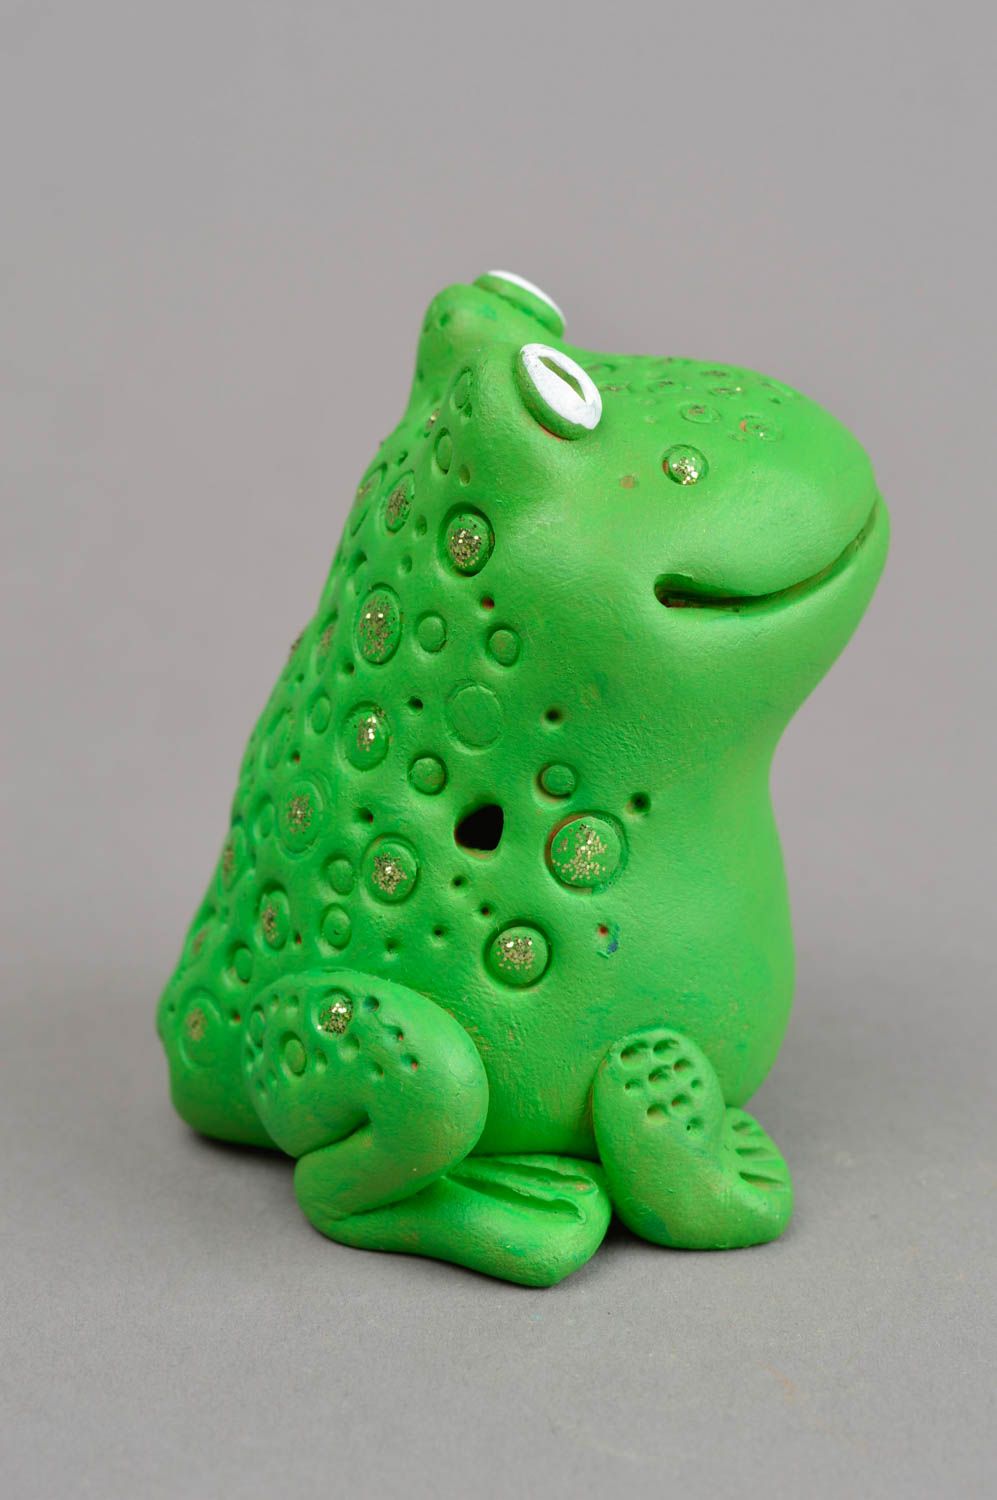 Handmade clay cute green toy unusual penny whistle interior decor ideas photo 3